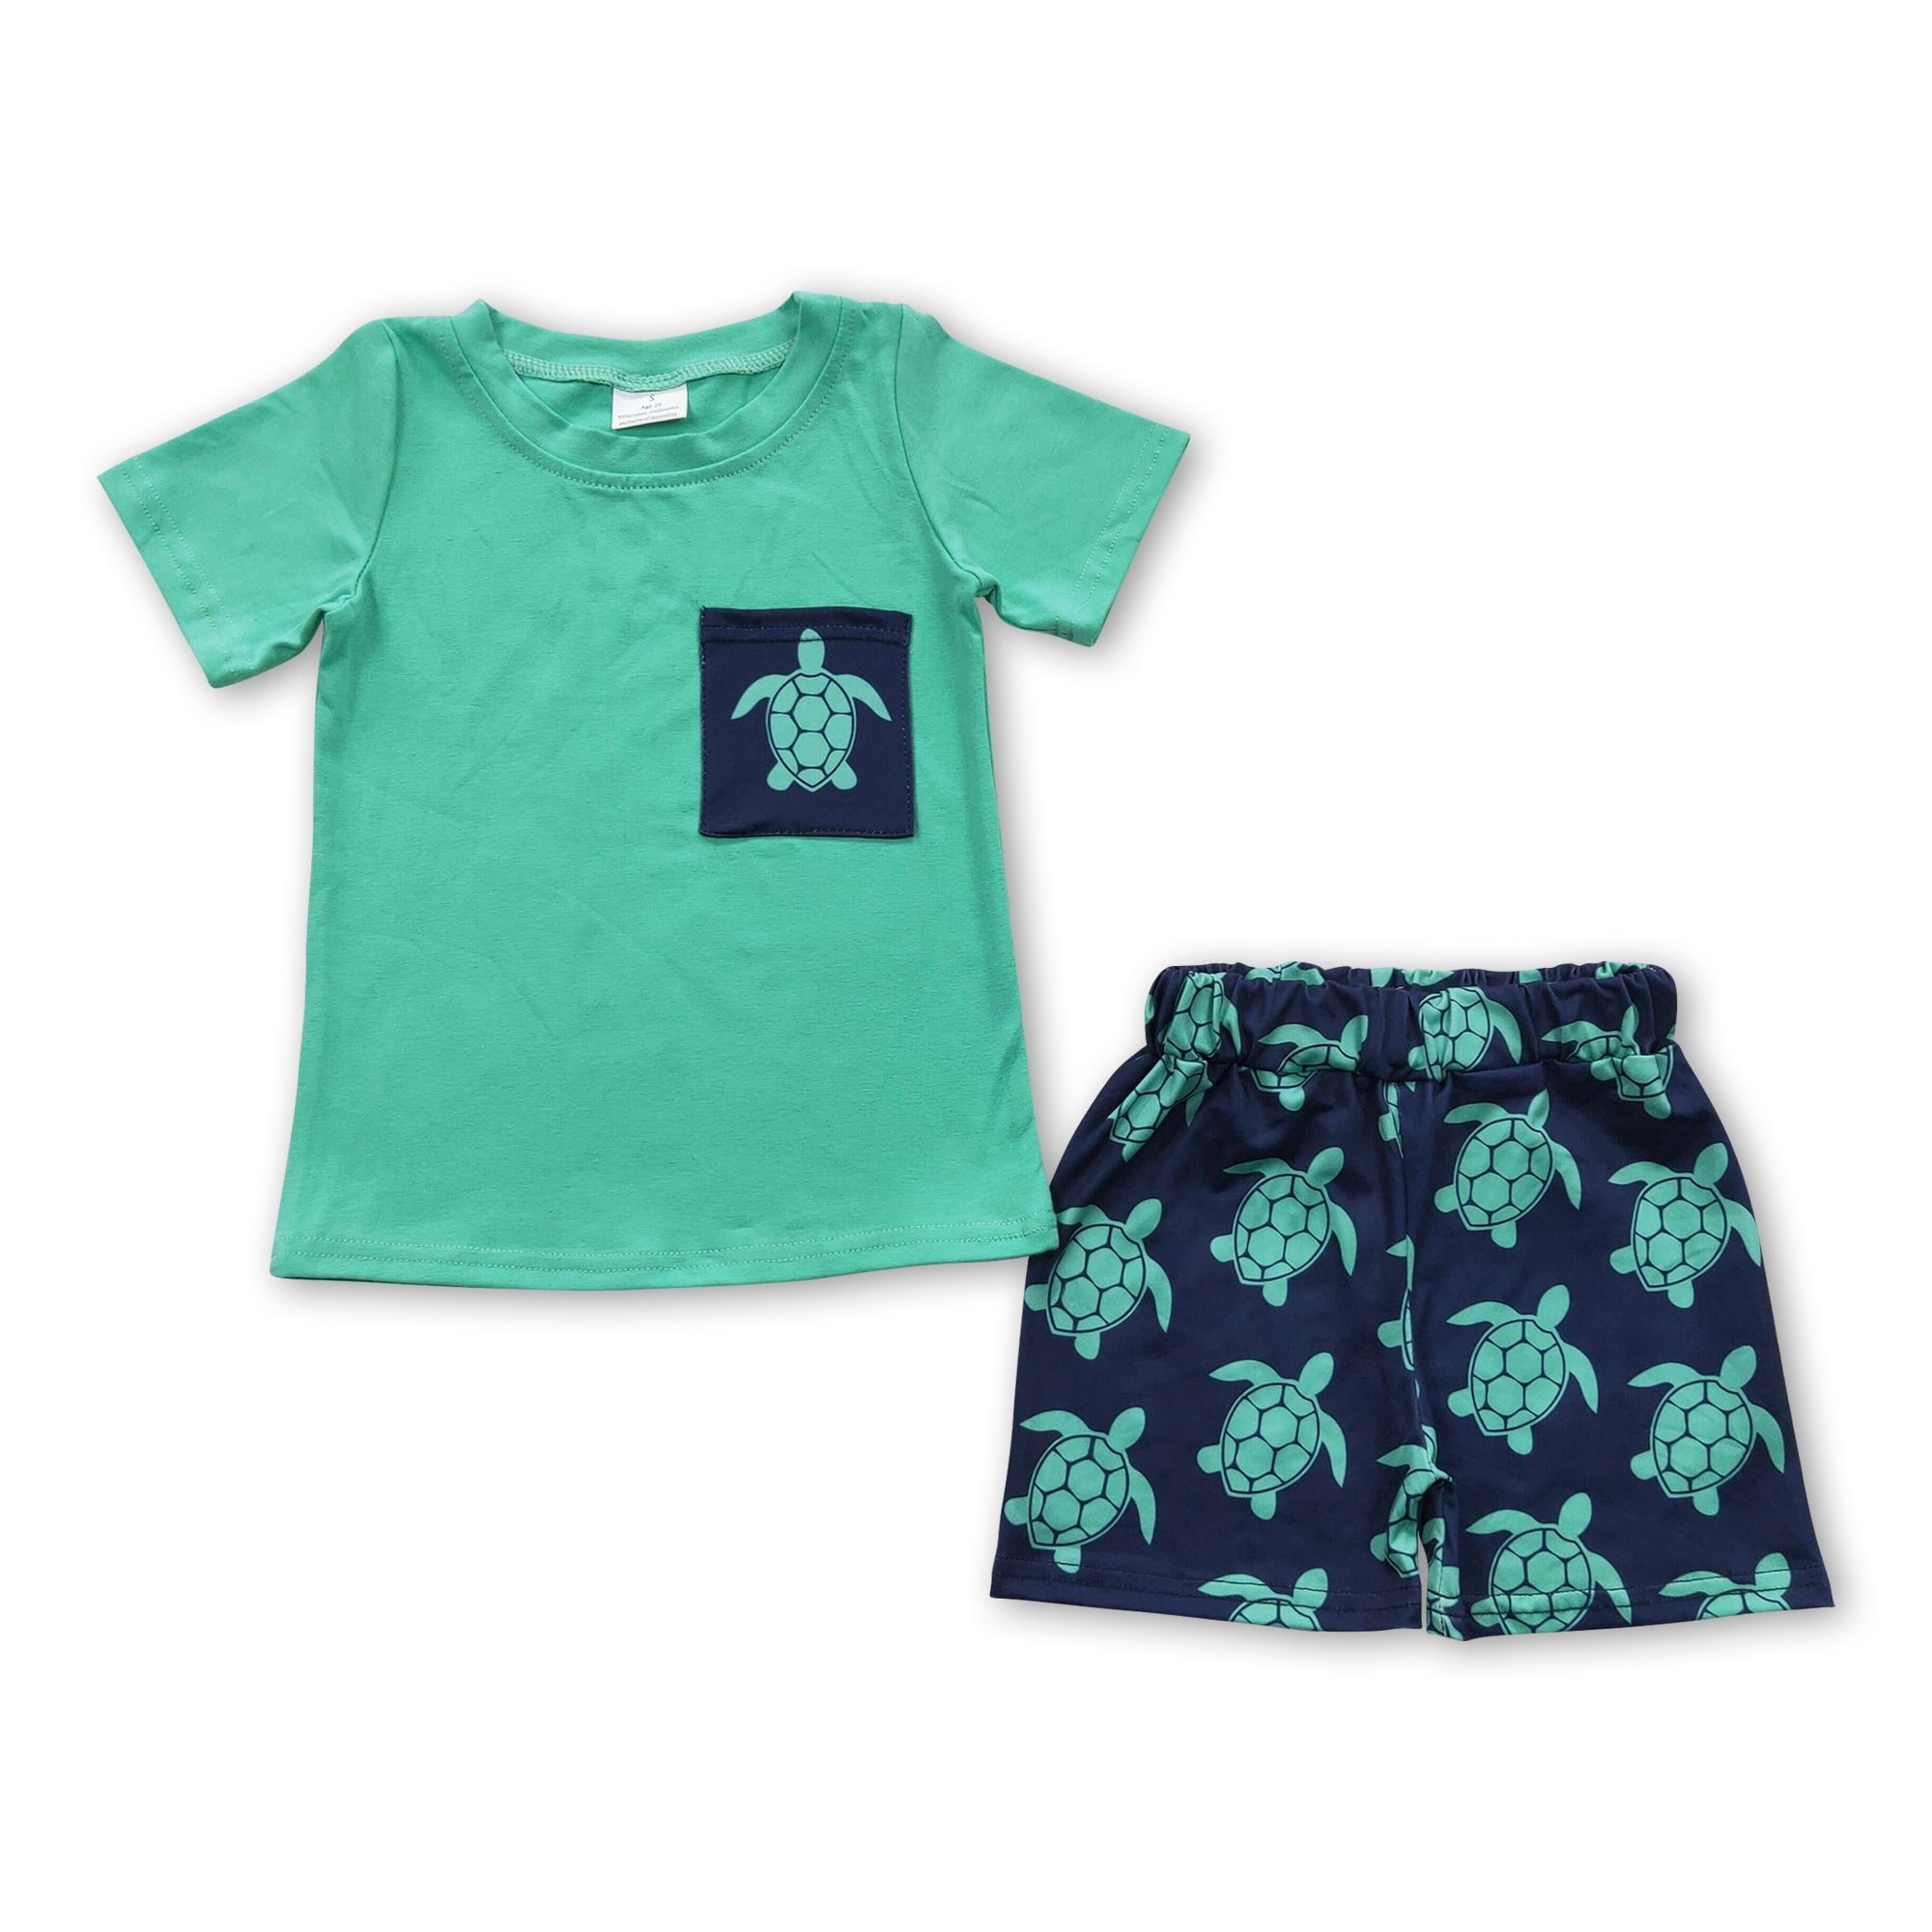 C9-4 boy clothes summer pocket green turtle set